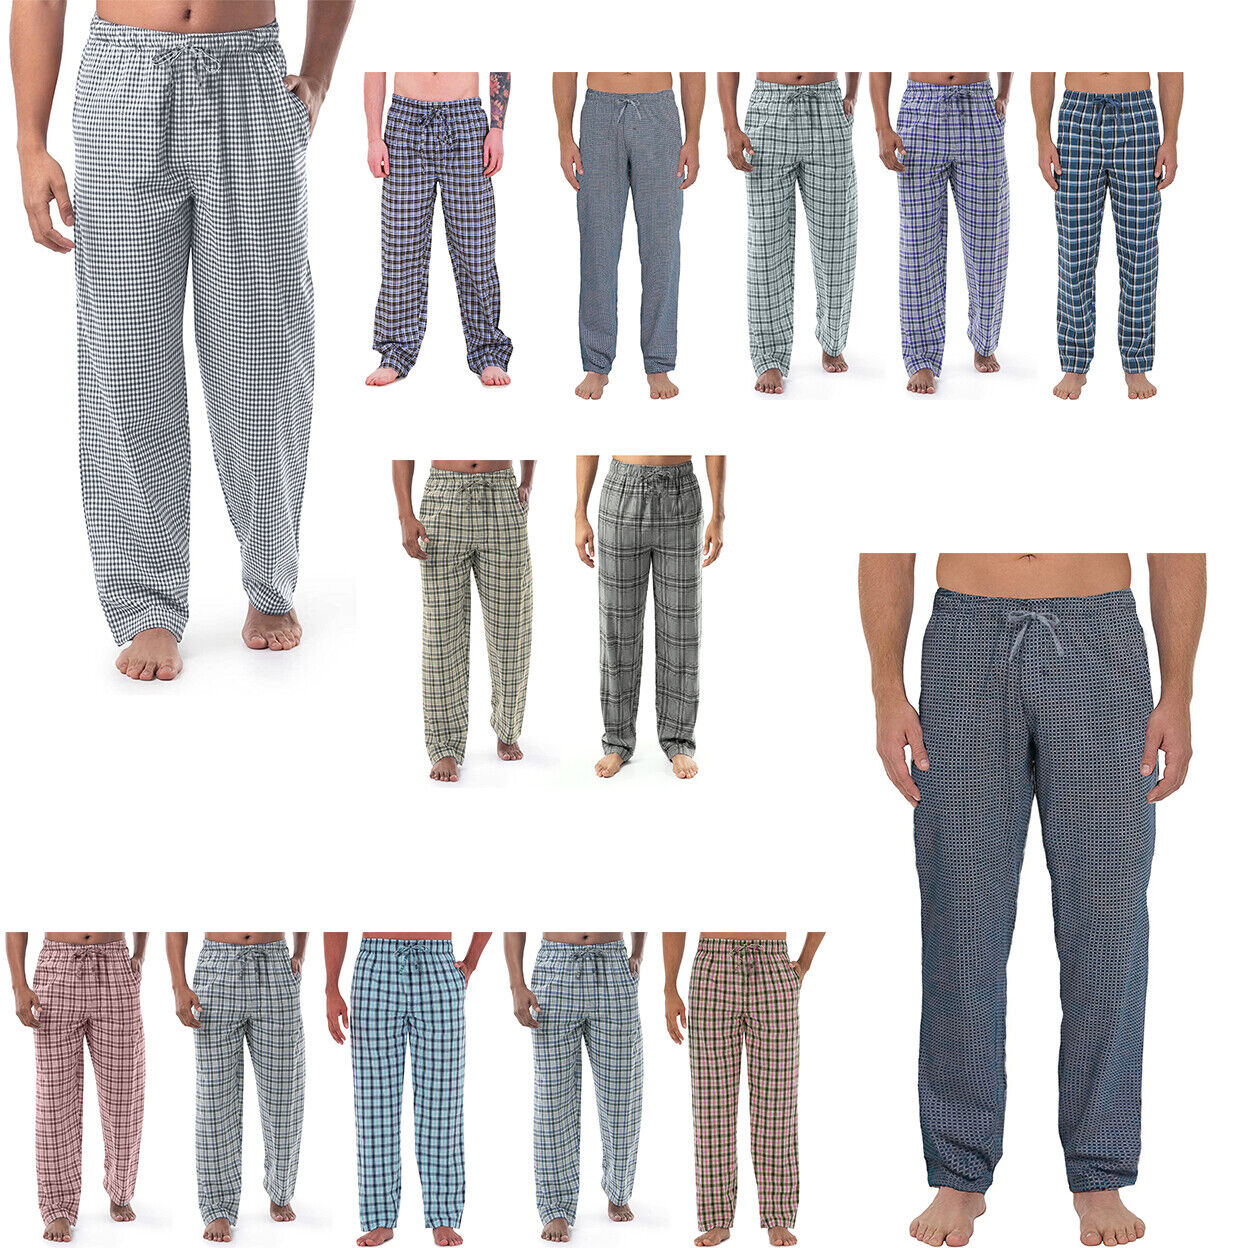 2-Pack: Men's Ultra-Soft Solid & Plaid Cotton Jersey Knit Comfy Sleep Lounge Pajama Pants - Solid & Plaid, Medium